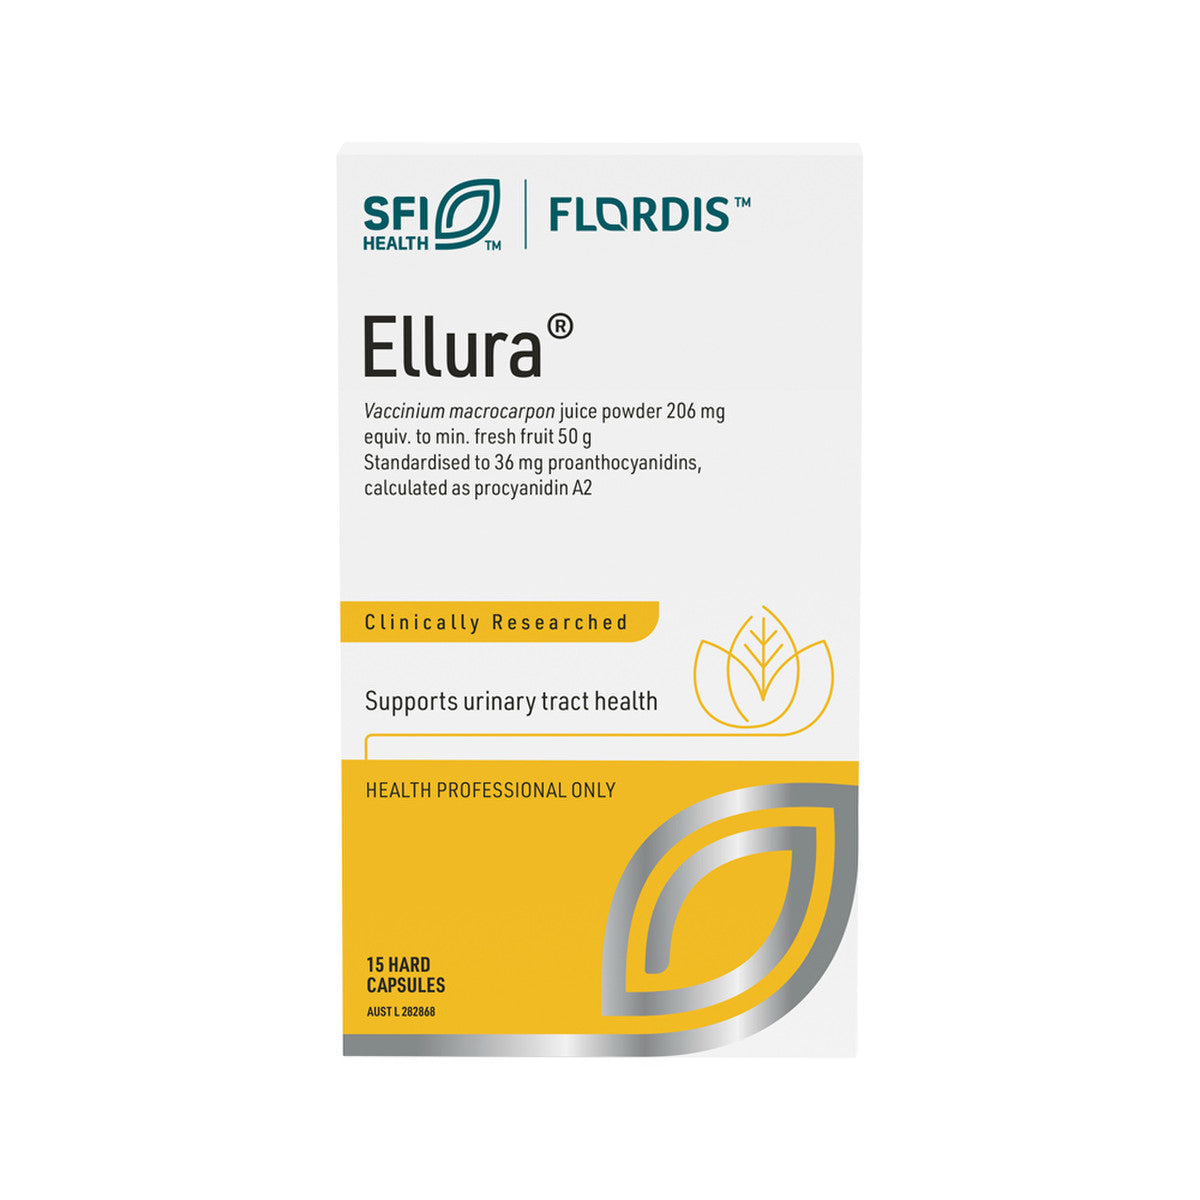 SFI Health Flordis - Ellura